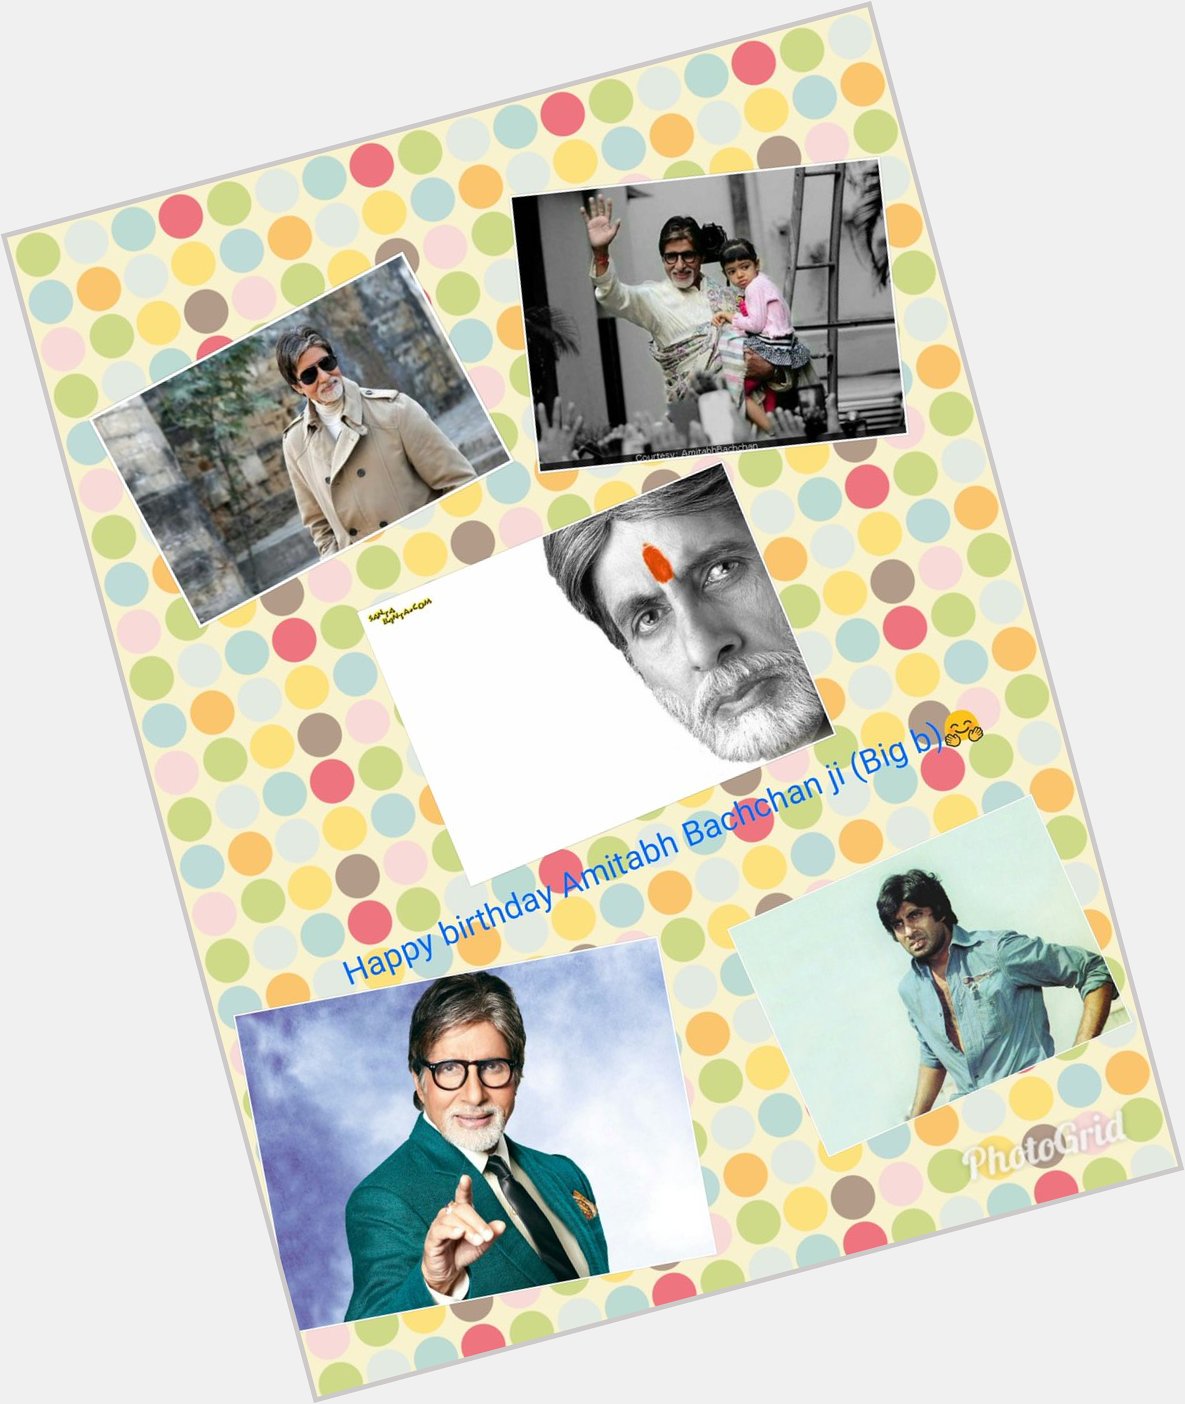  Happy birthday Amitabh Bachchan ji 